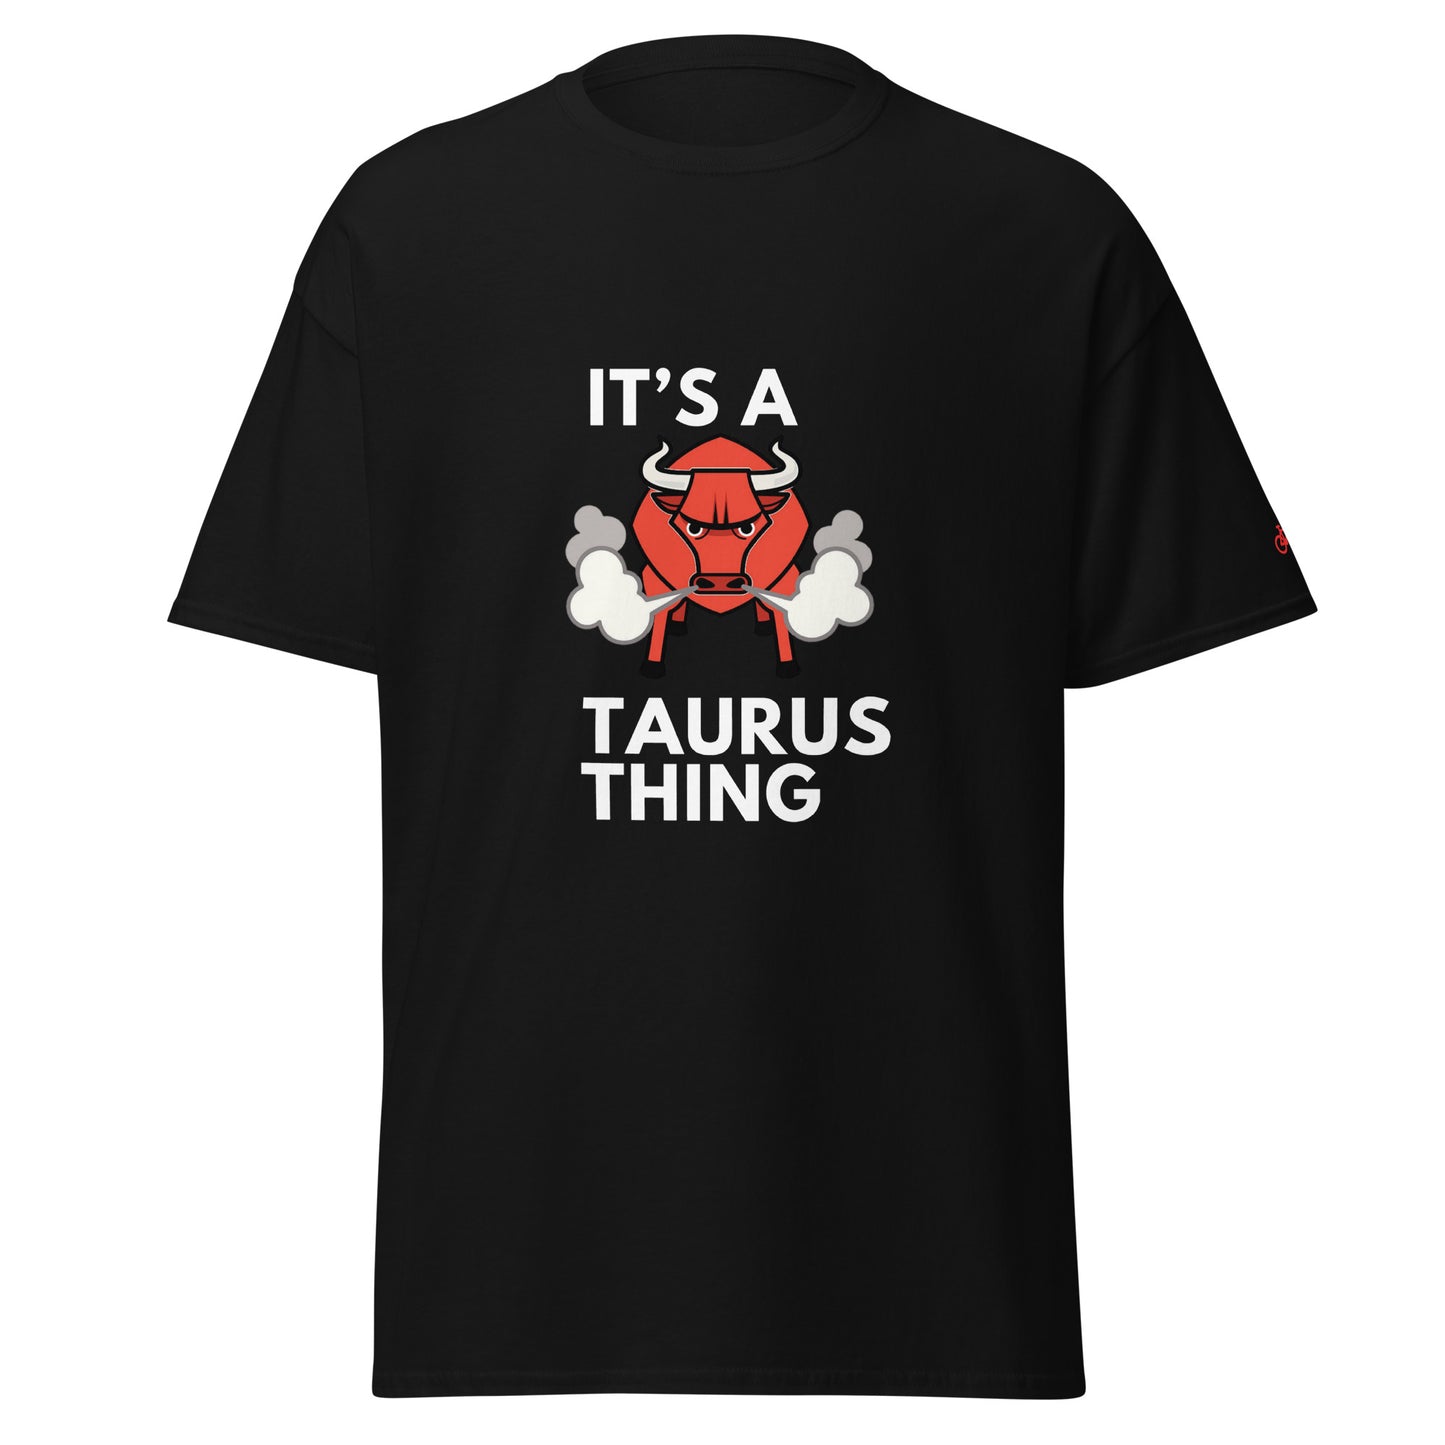 It's a Taurus Thing tee